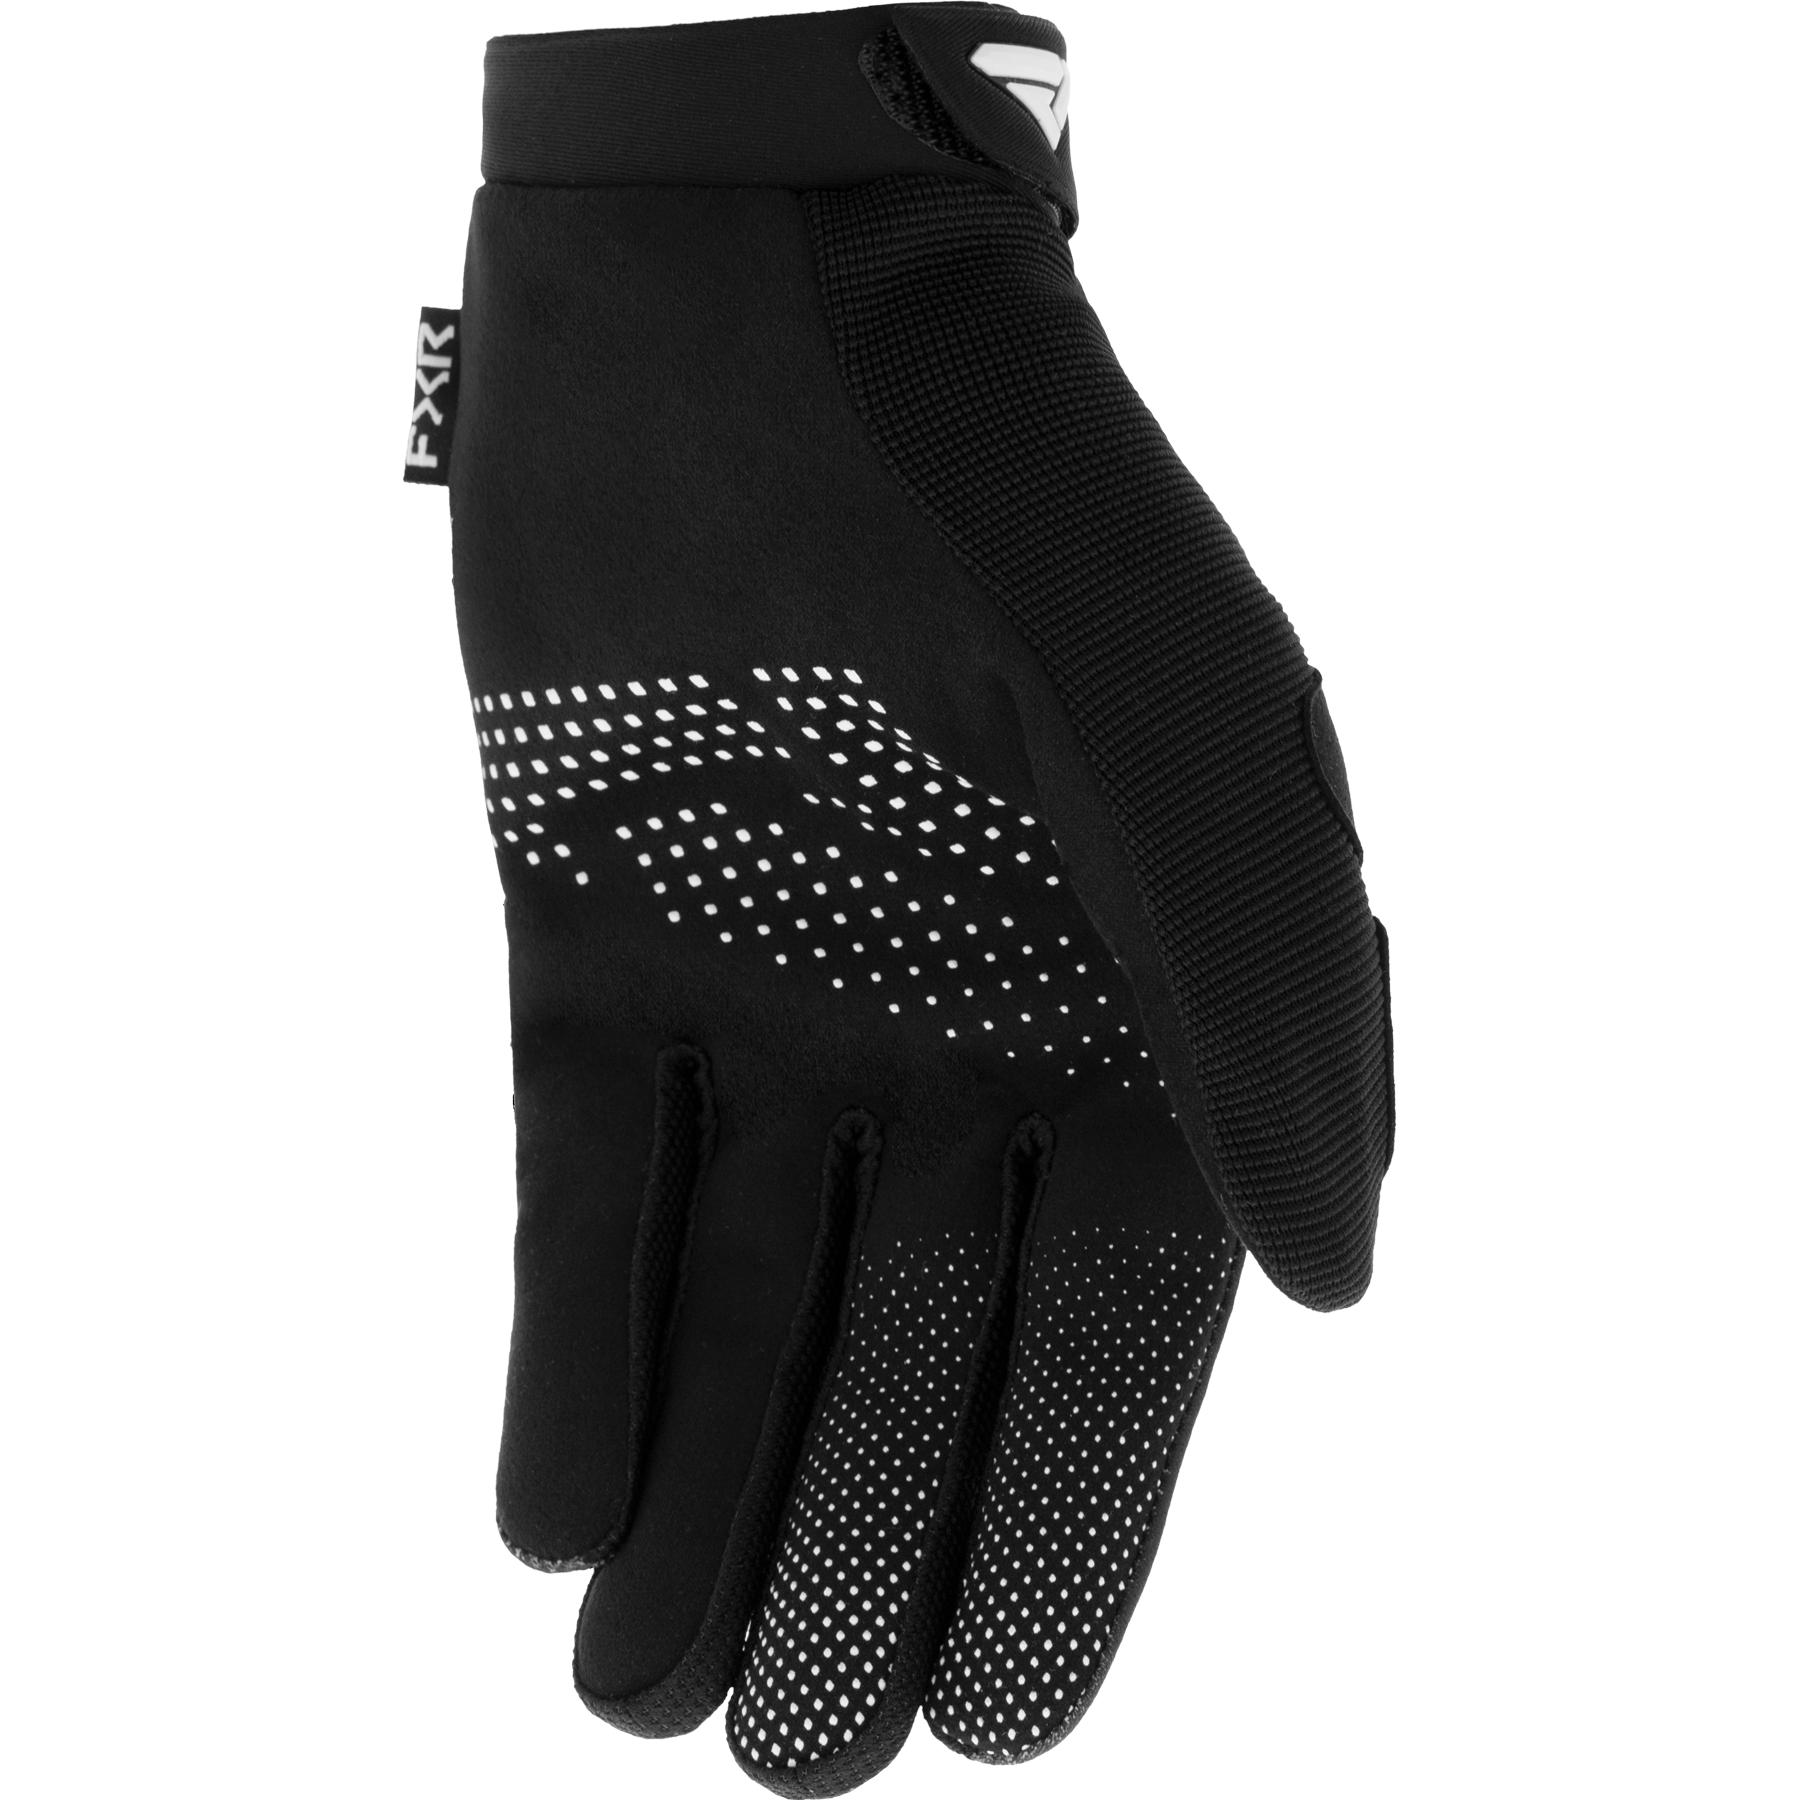 FXR Reflex YOUTH MX Glove Black/White